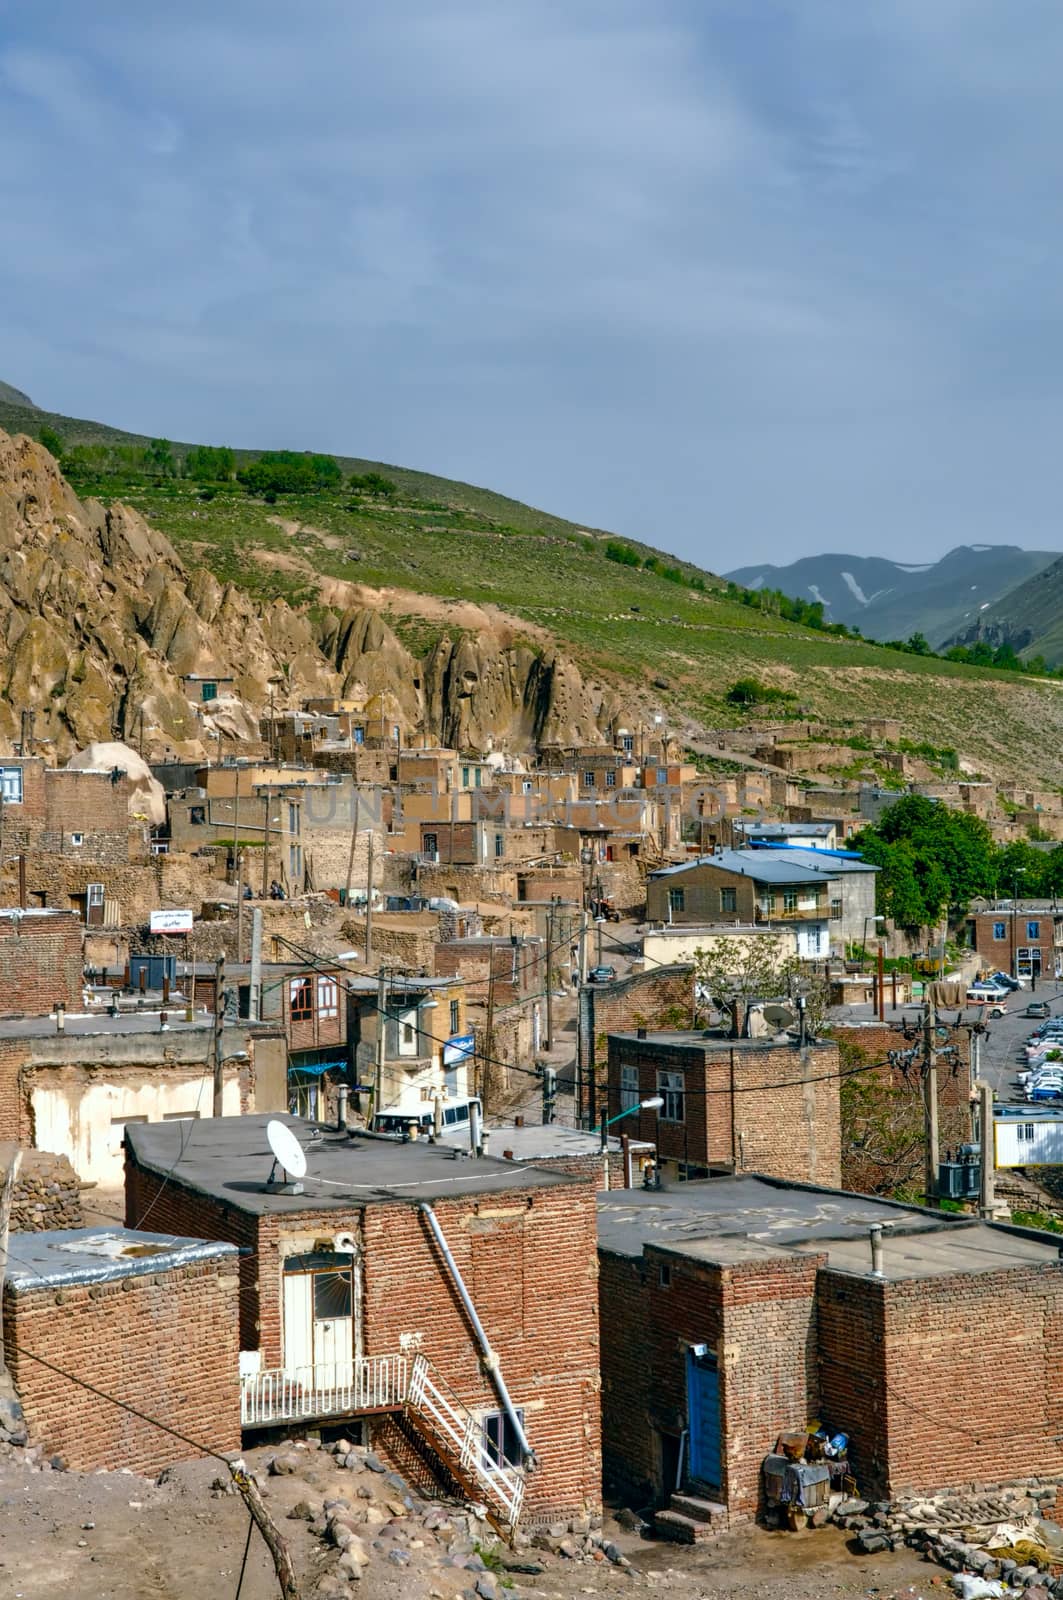 Dwellings in Kandovan village in Iran